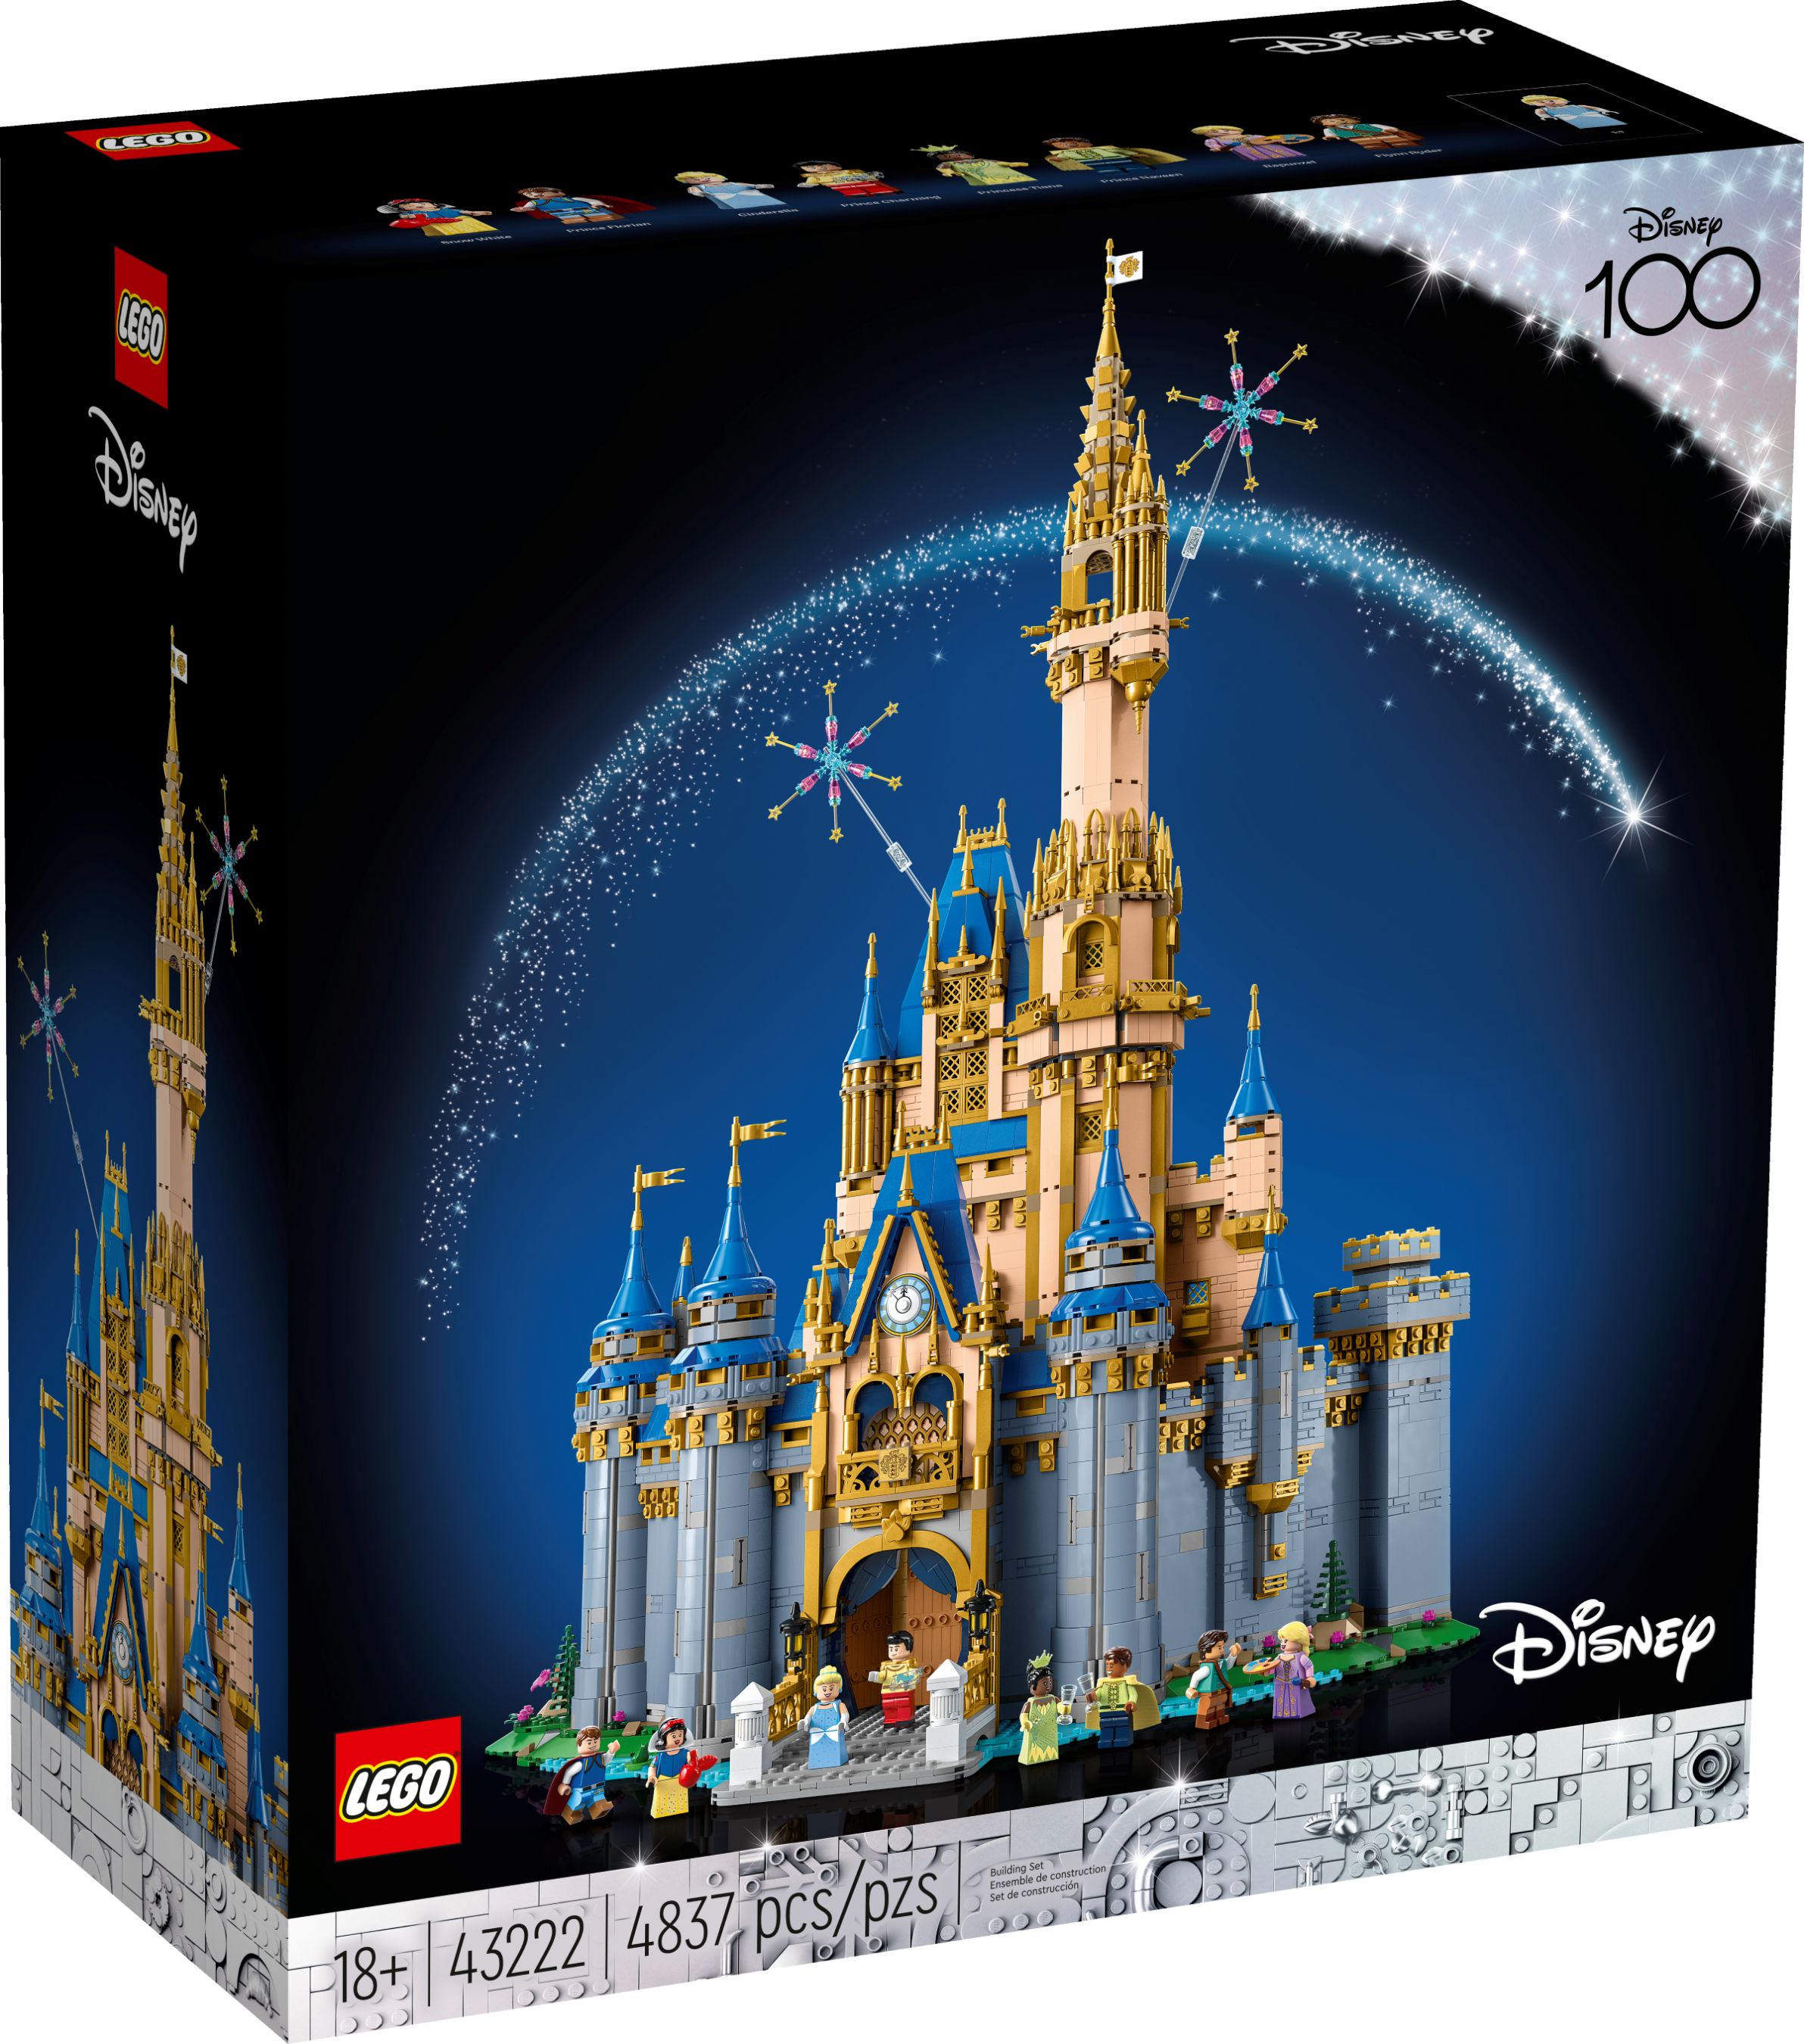 LEGO Disney 43222 Disney Schloss LEGO_43222_alt1.jpg